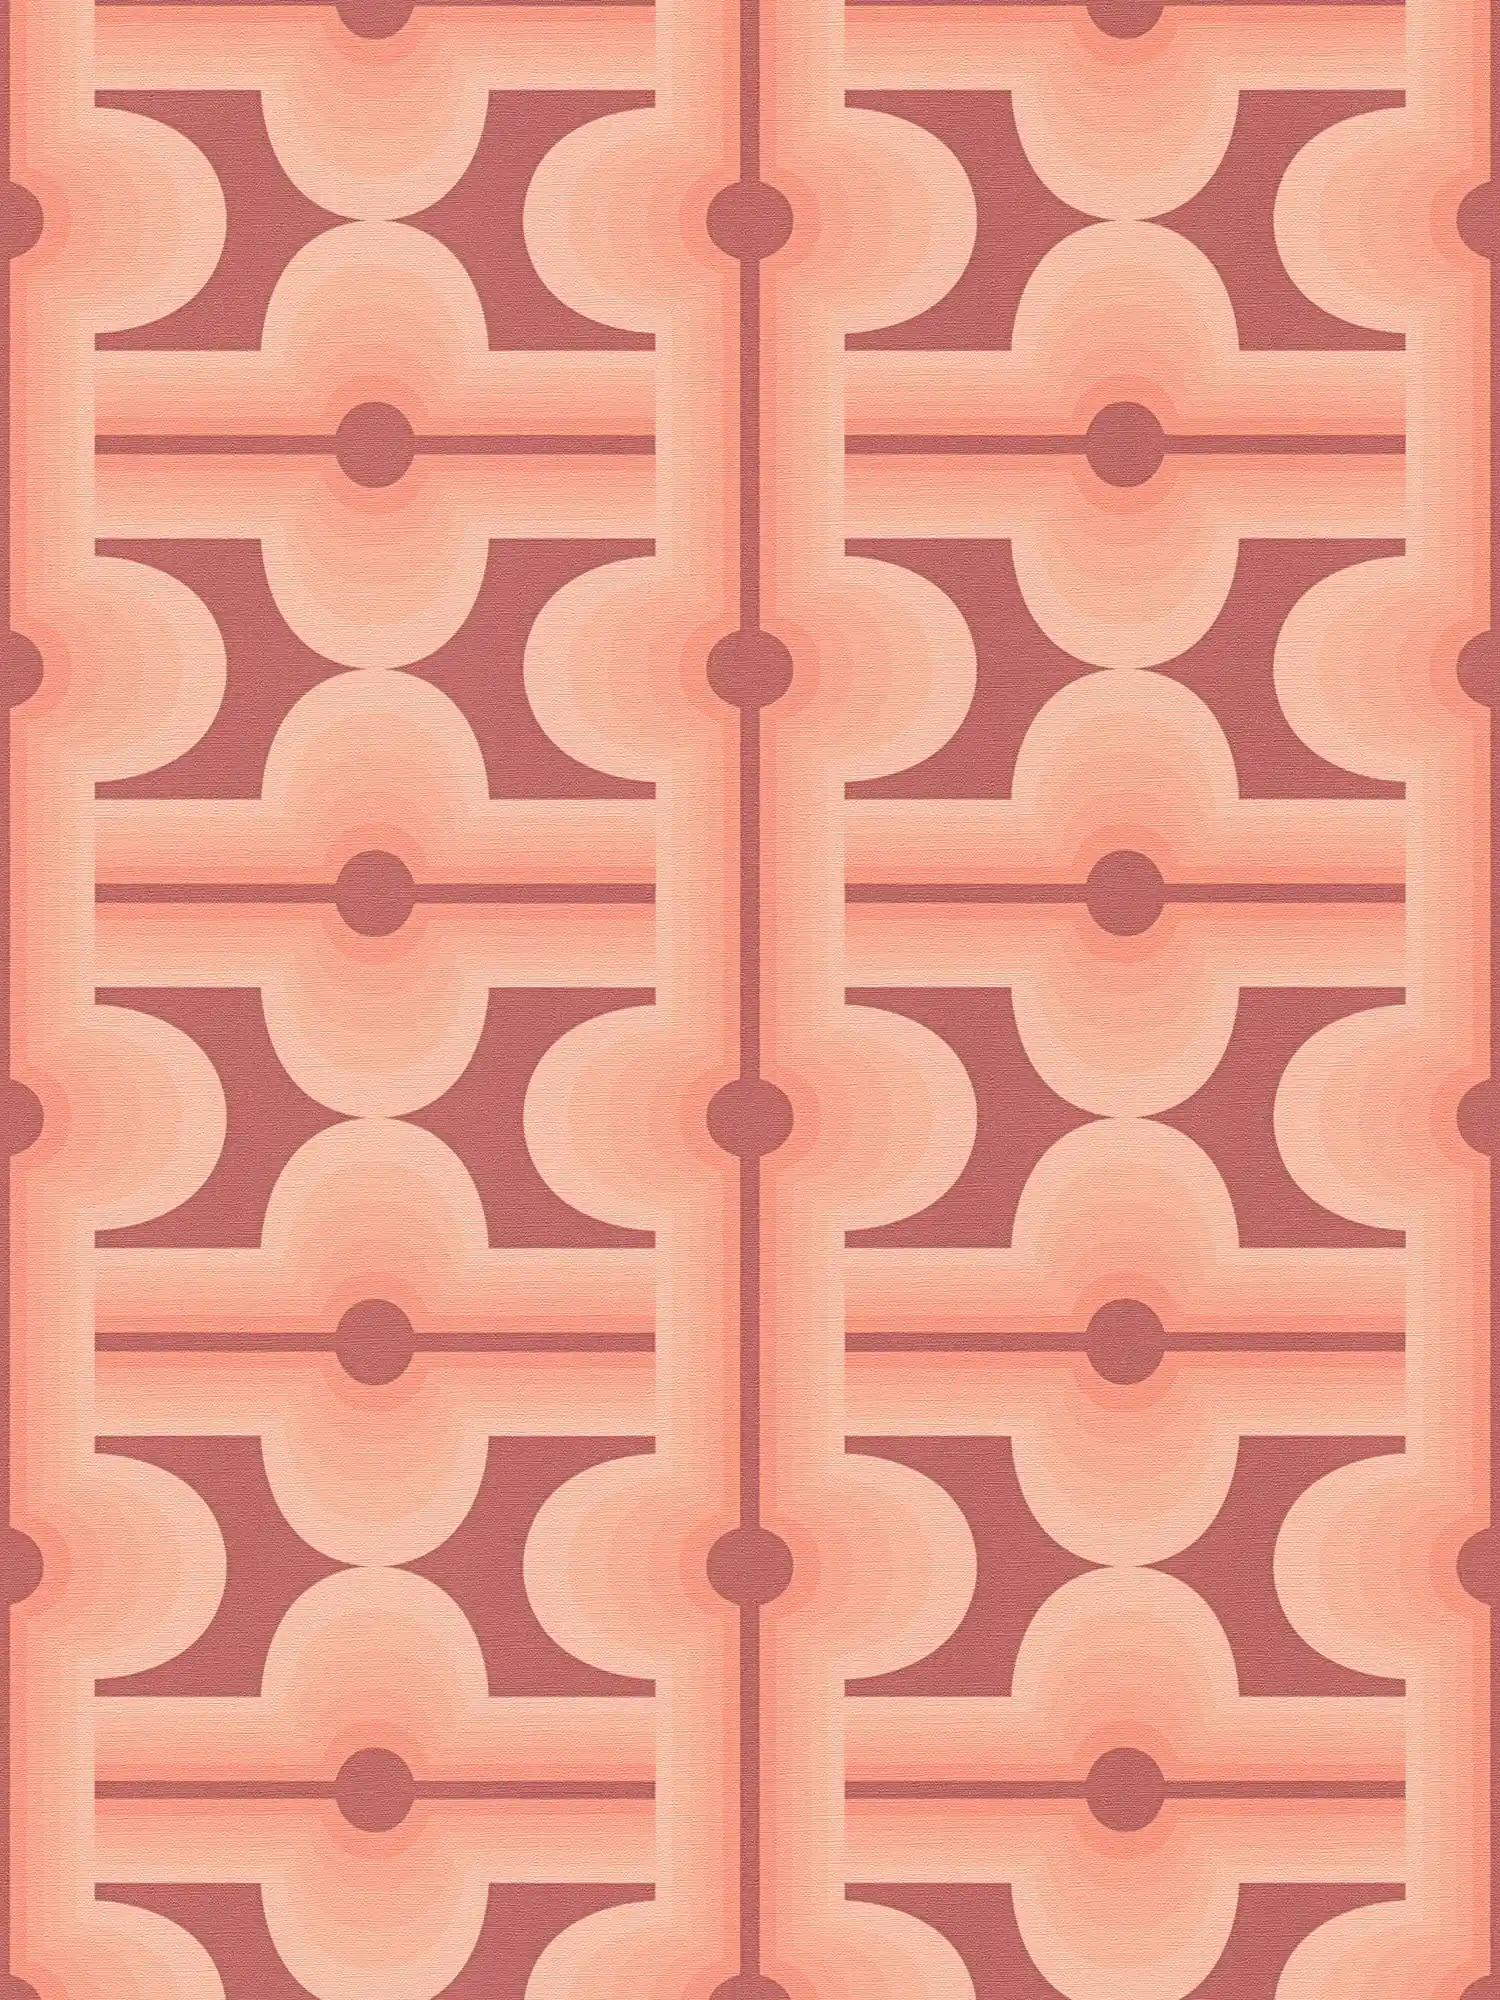 Vliesbehang met abstract patroon in retrostijl - rood, oranje
